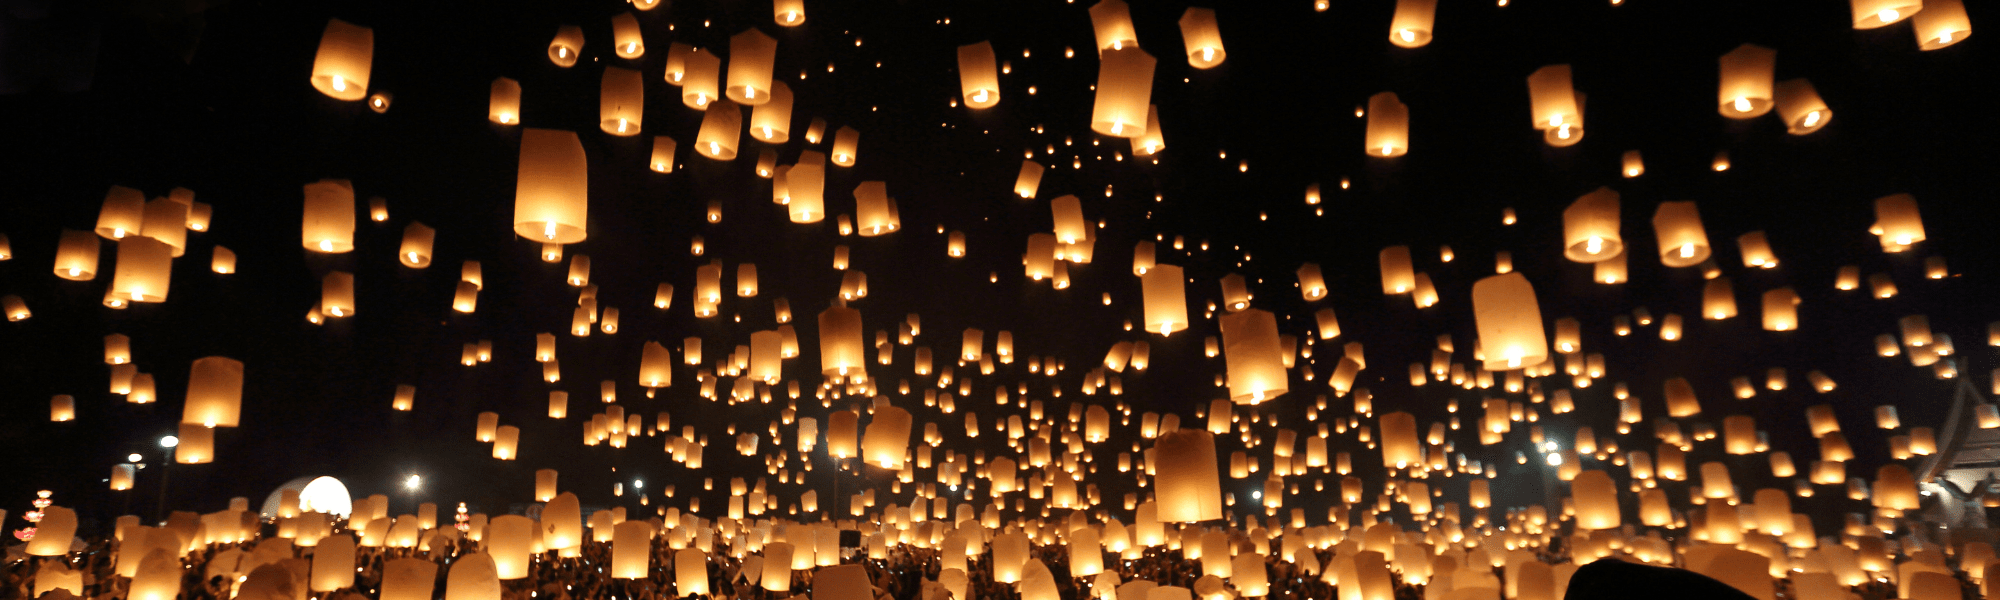 WISTA Singapore Celebrates Diwali 